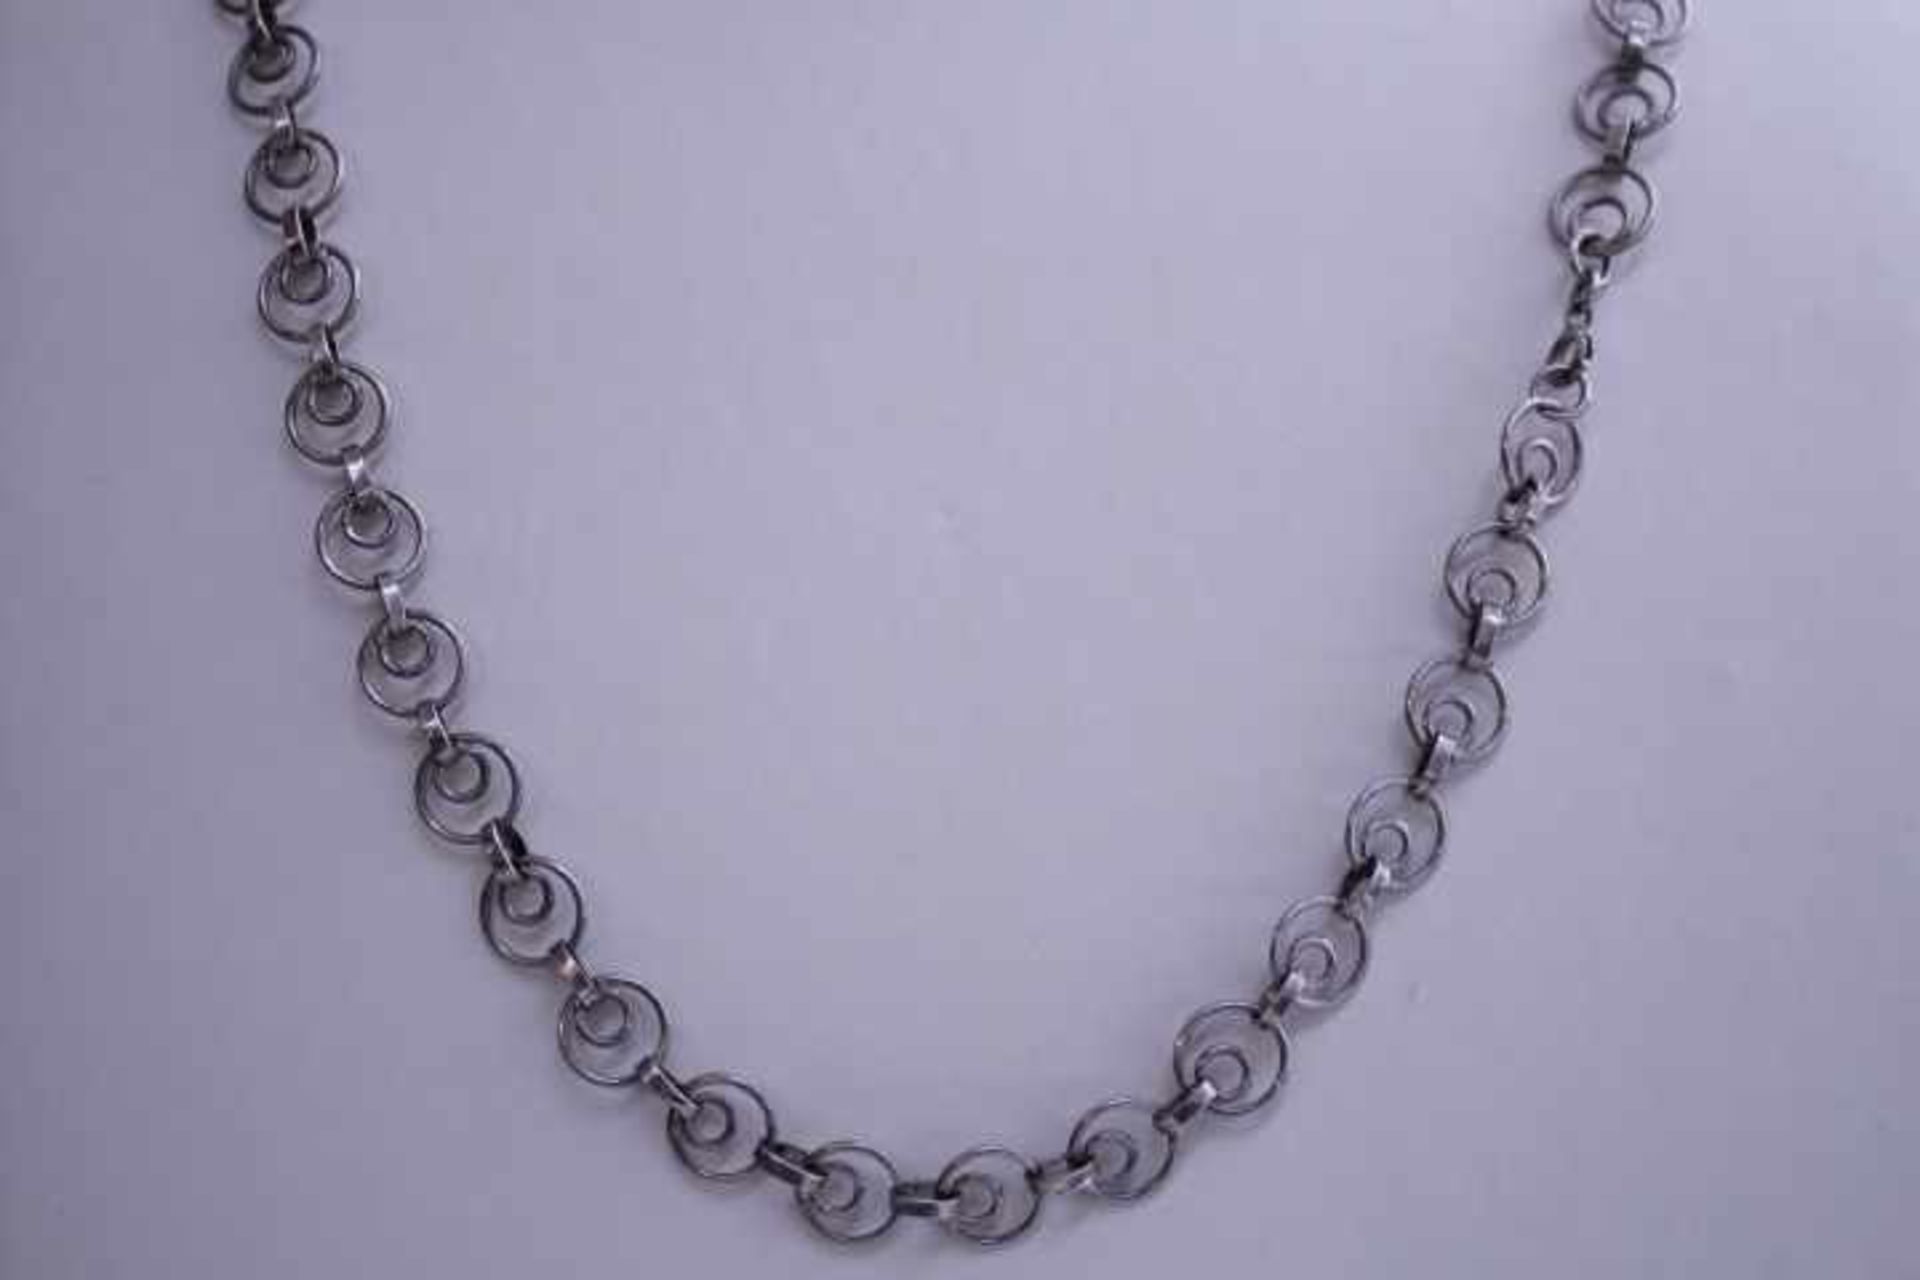 Silber HalsketteRingförmige doppelglieder800 Silber wohl um 1930L:86cm